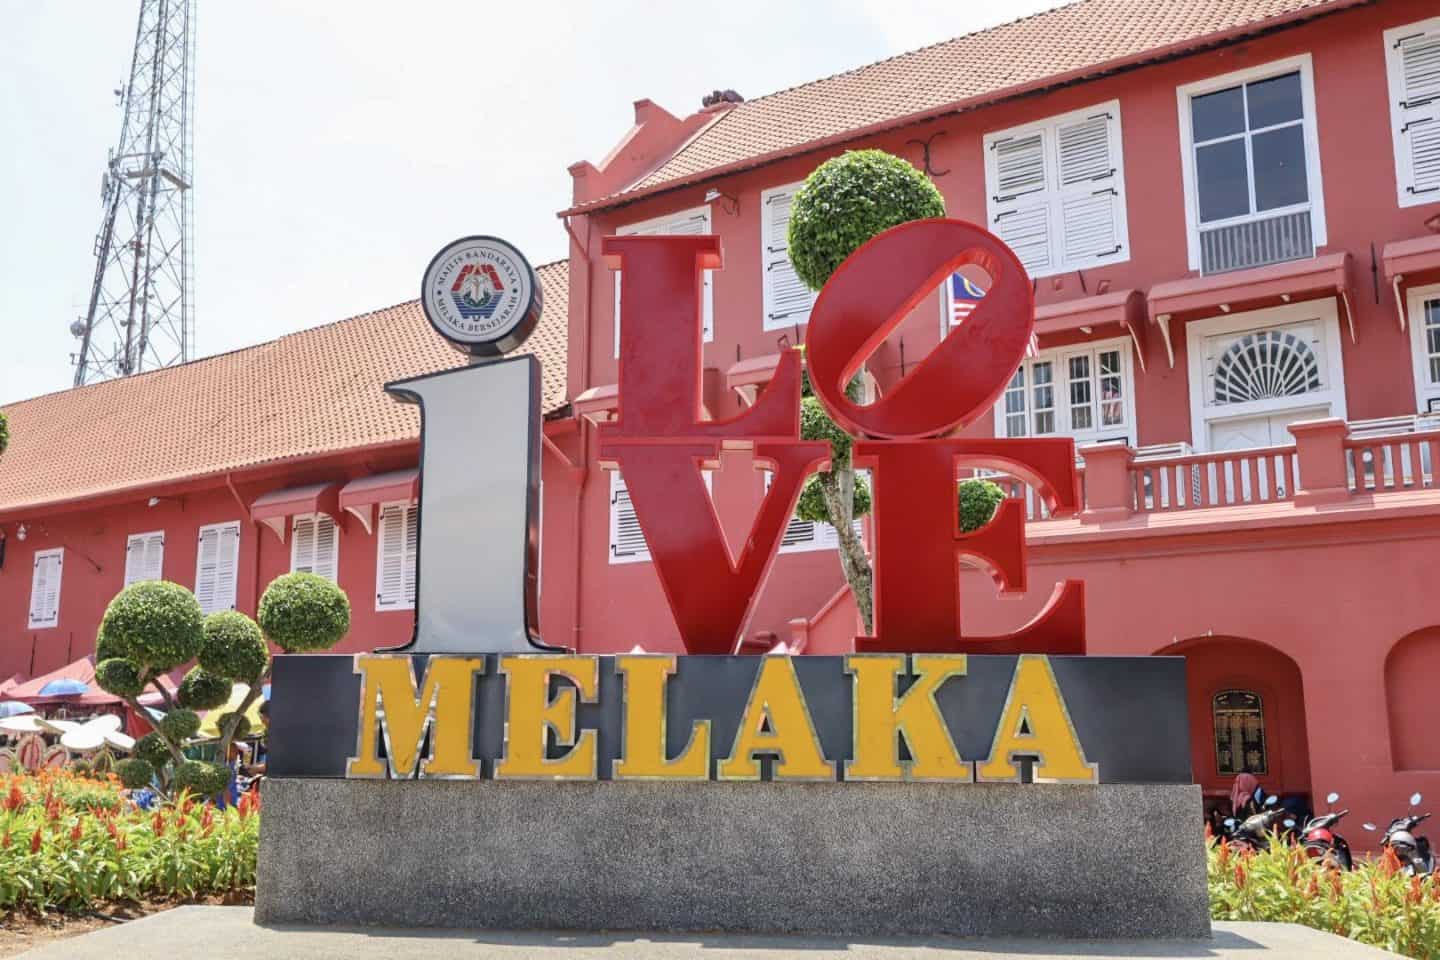 things to do in Melaka Malaysia, l love mekala sign